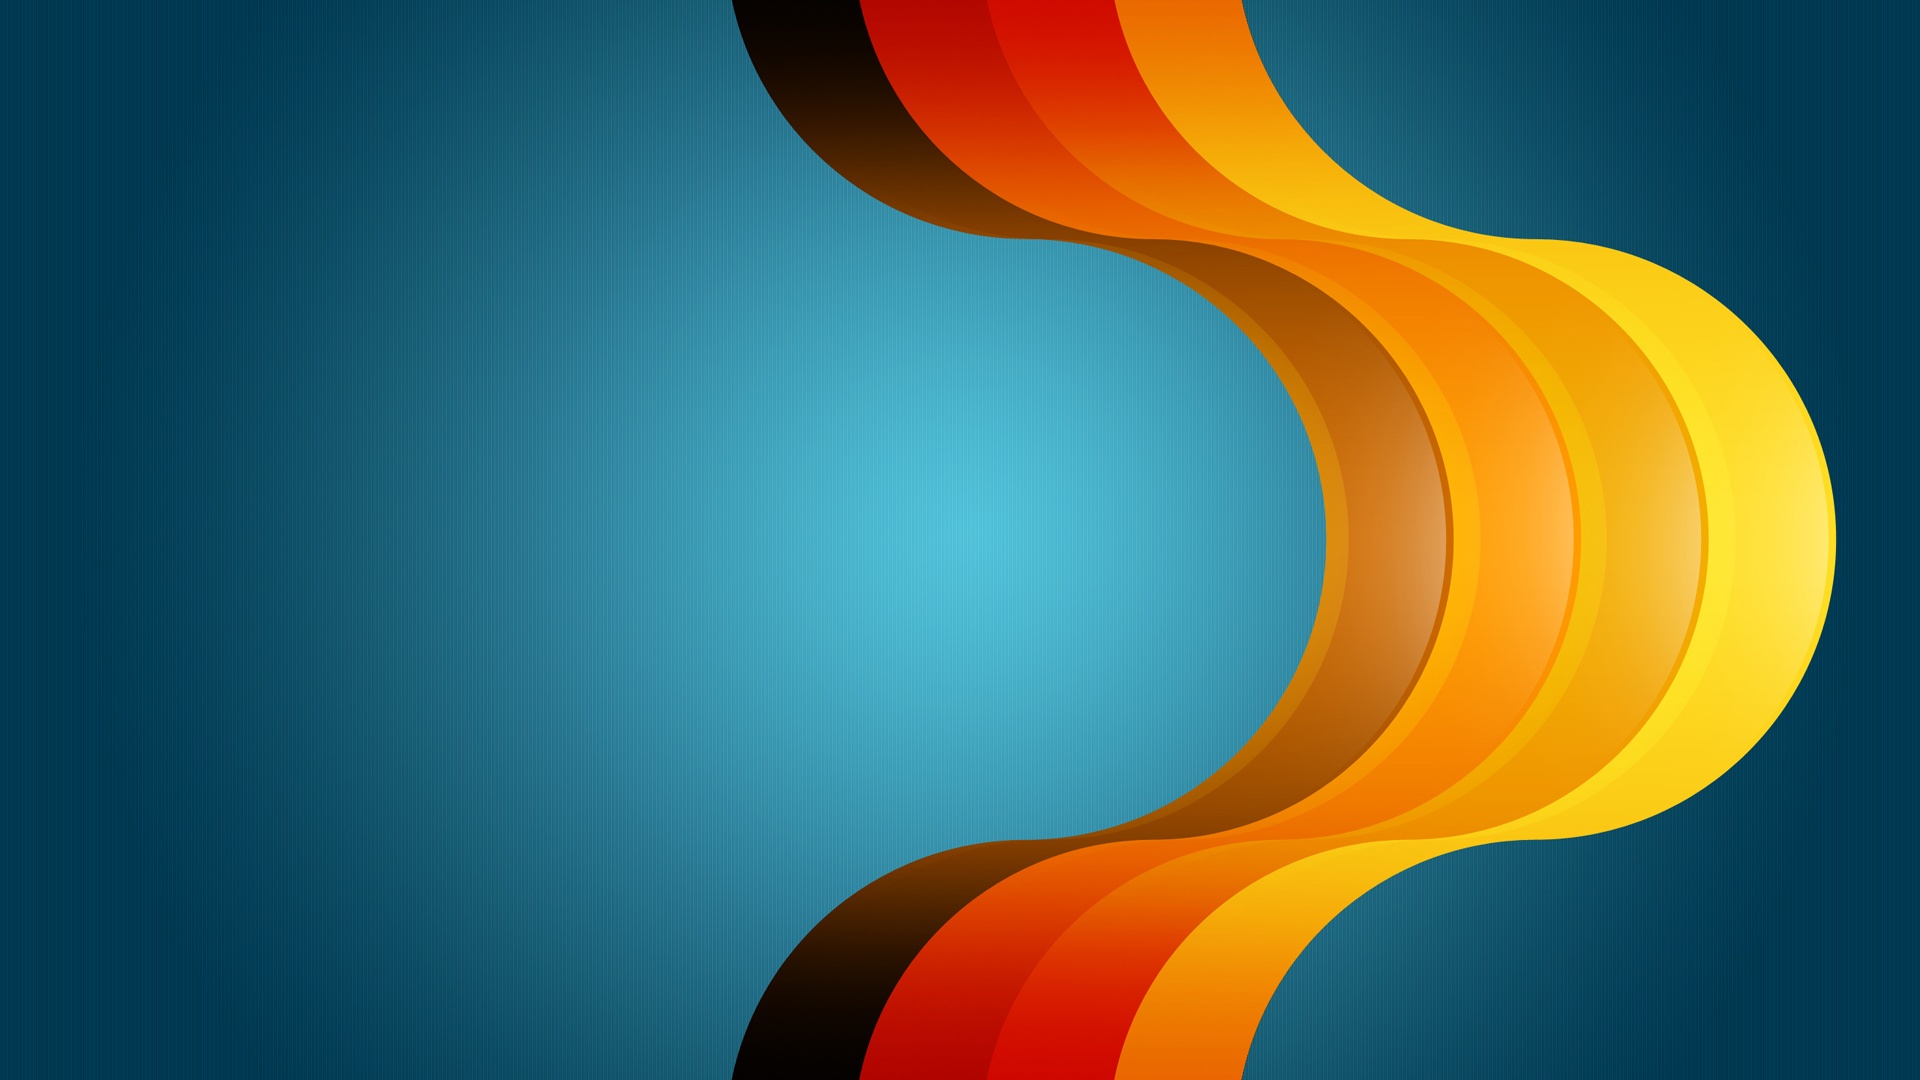 Blue And Orange Backgrounds Free | PixelsTalk.Net